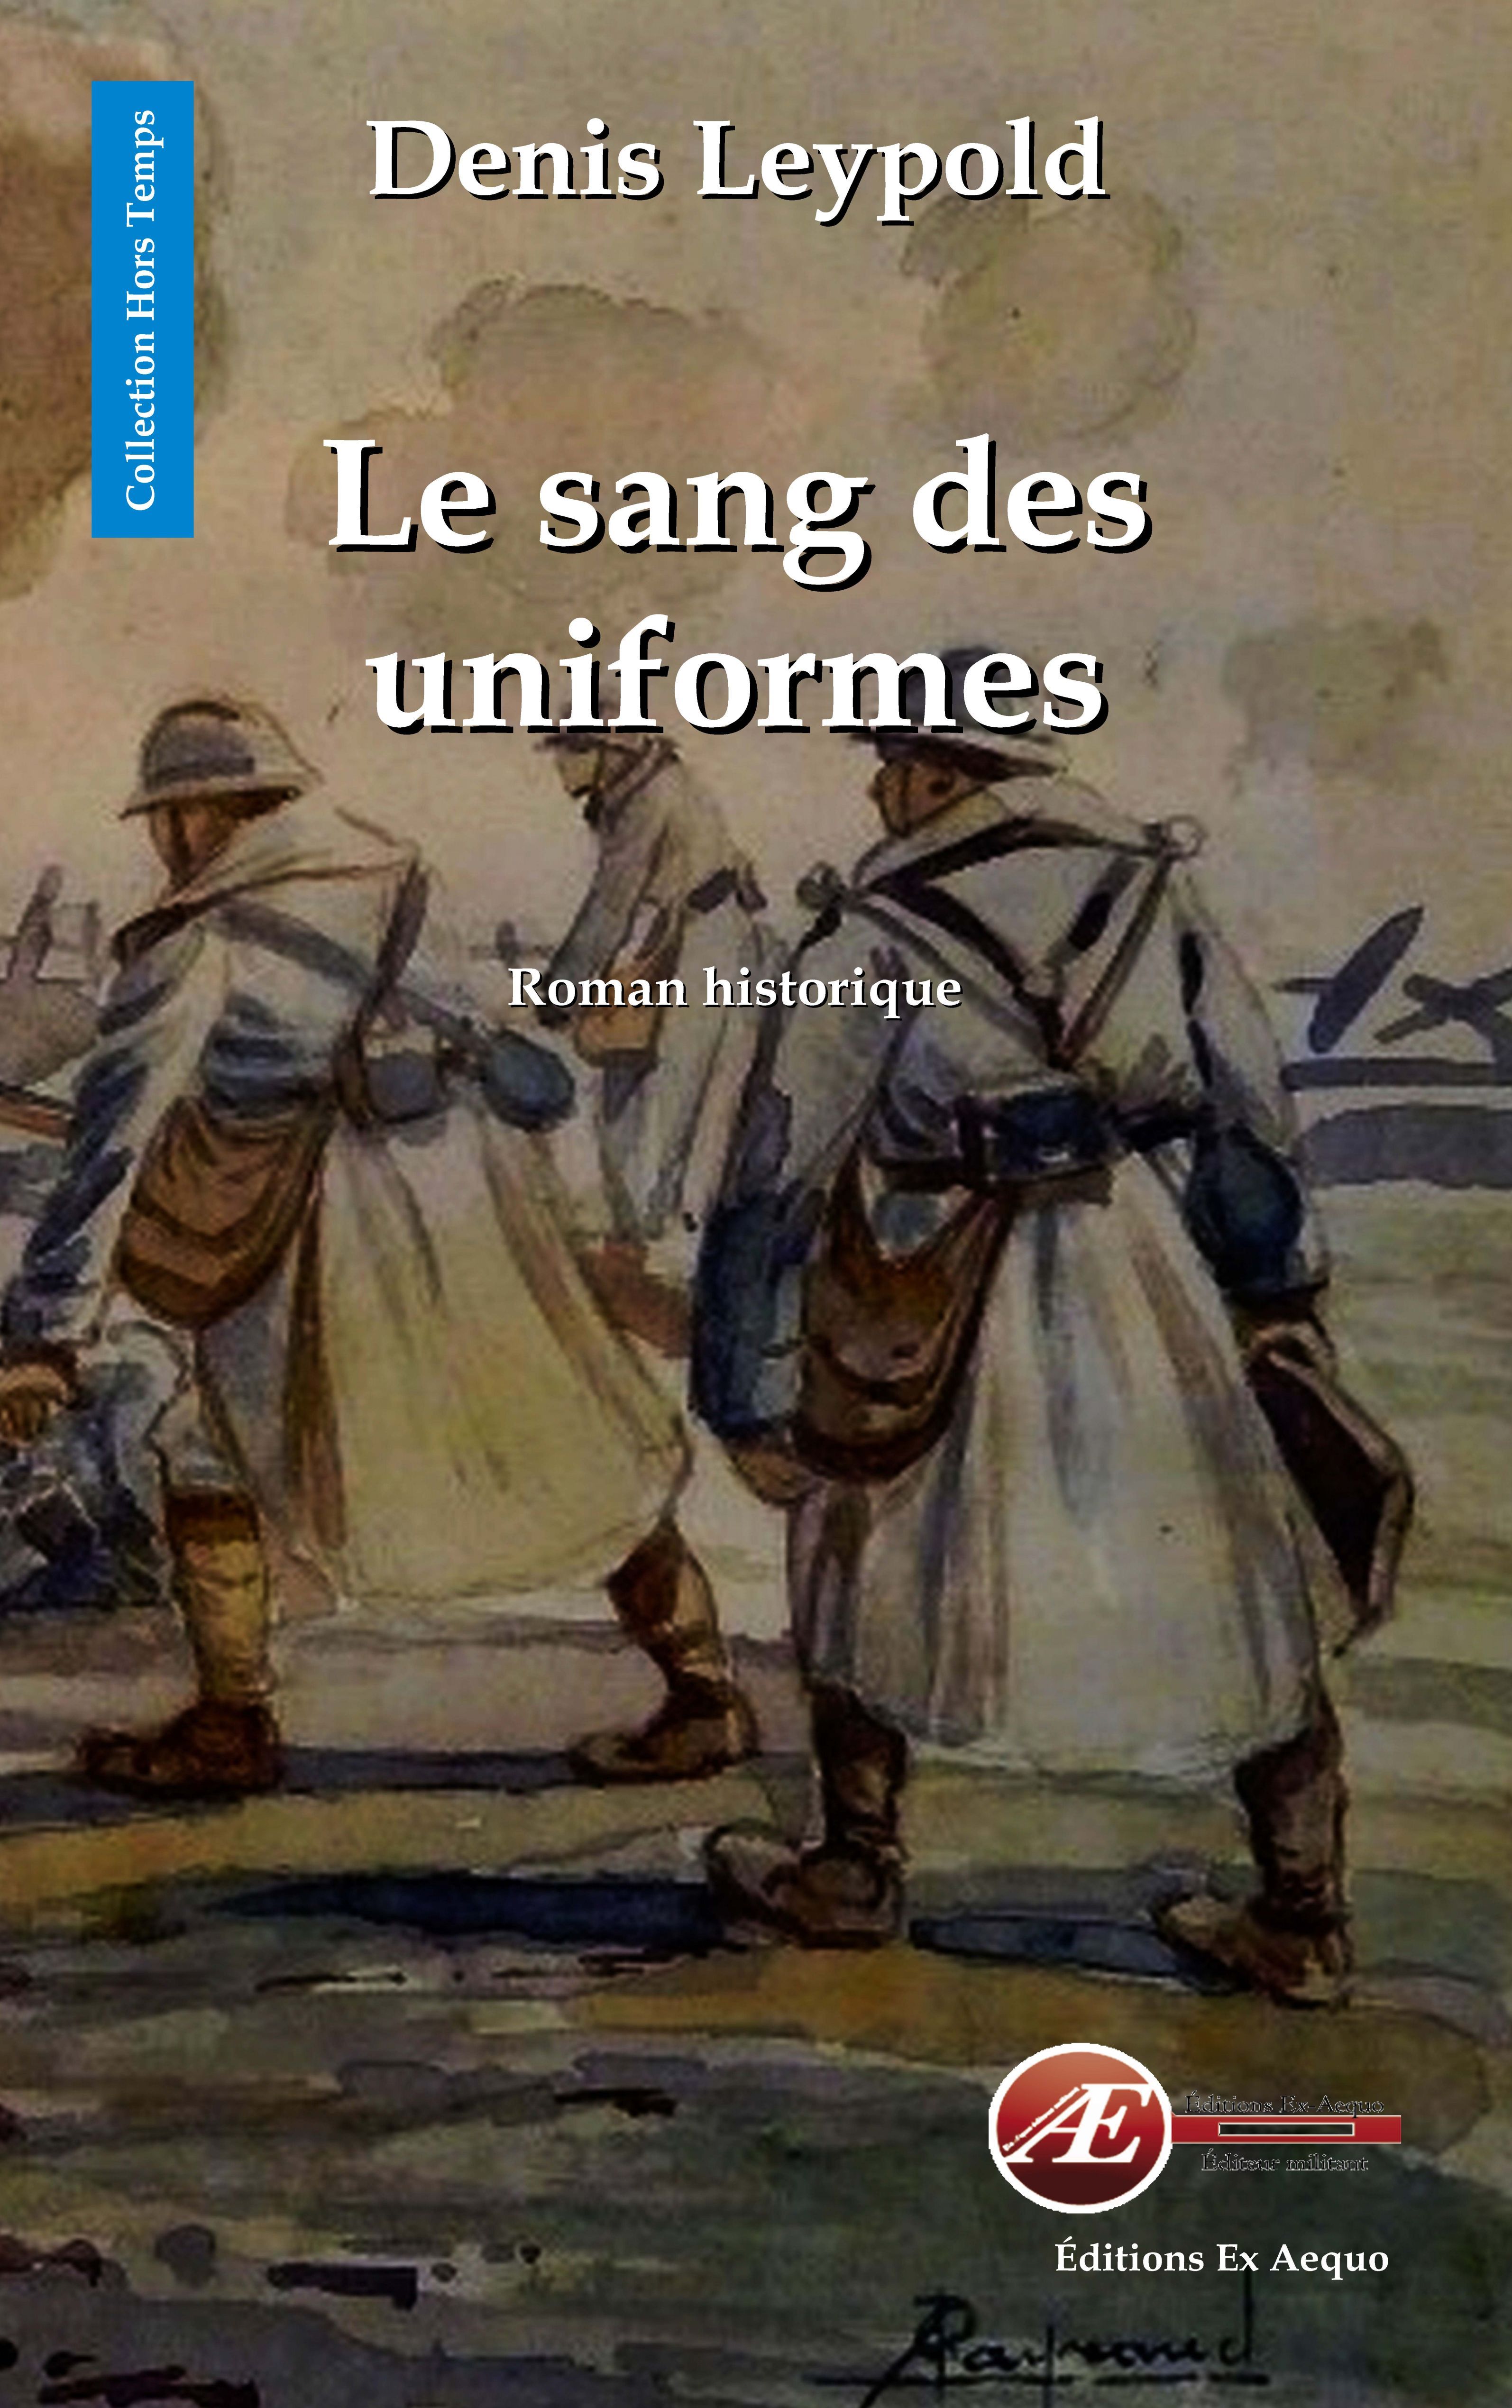 You are currently viewing Le sang des uniformes, de Denis Leypold